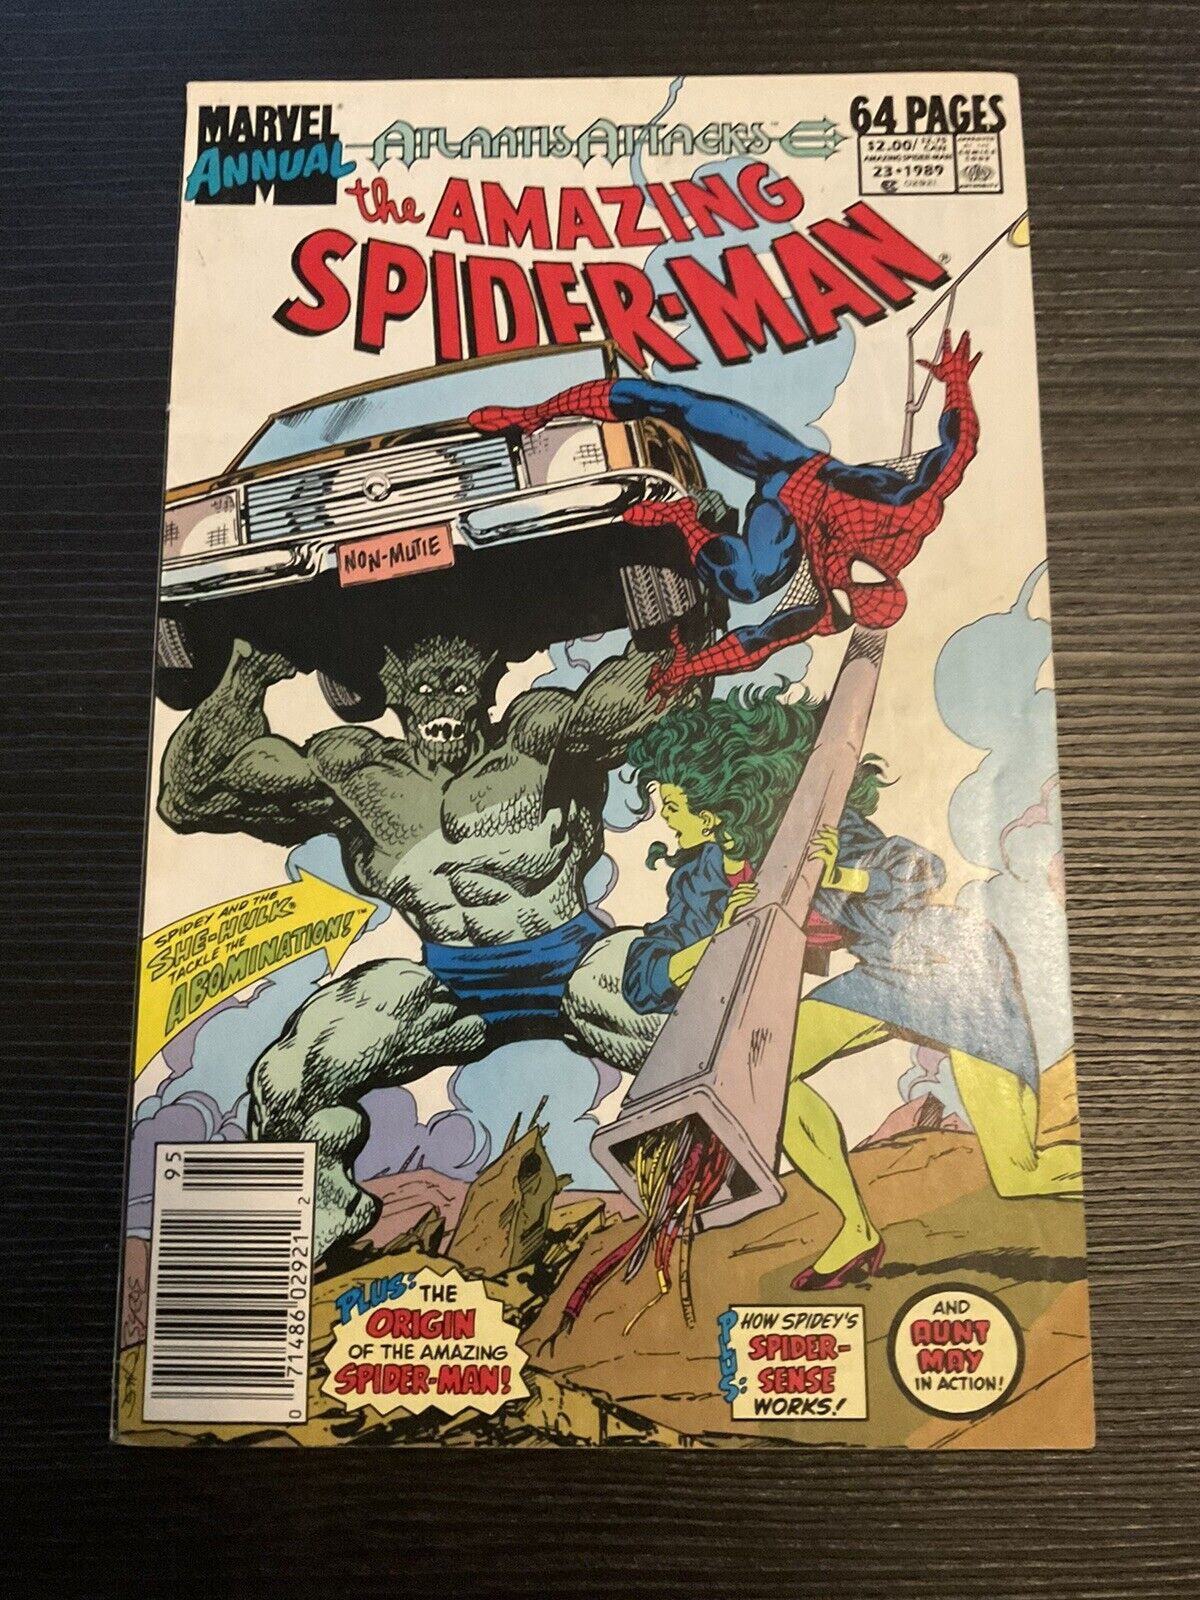 The Amazing Spider-Man Annual #23 (Marvel Comics September 1989) VF